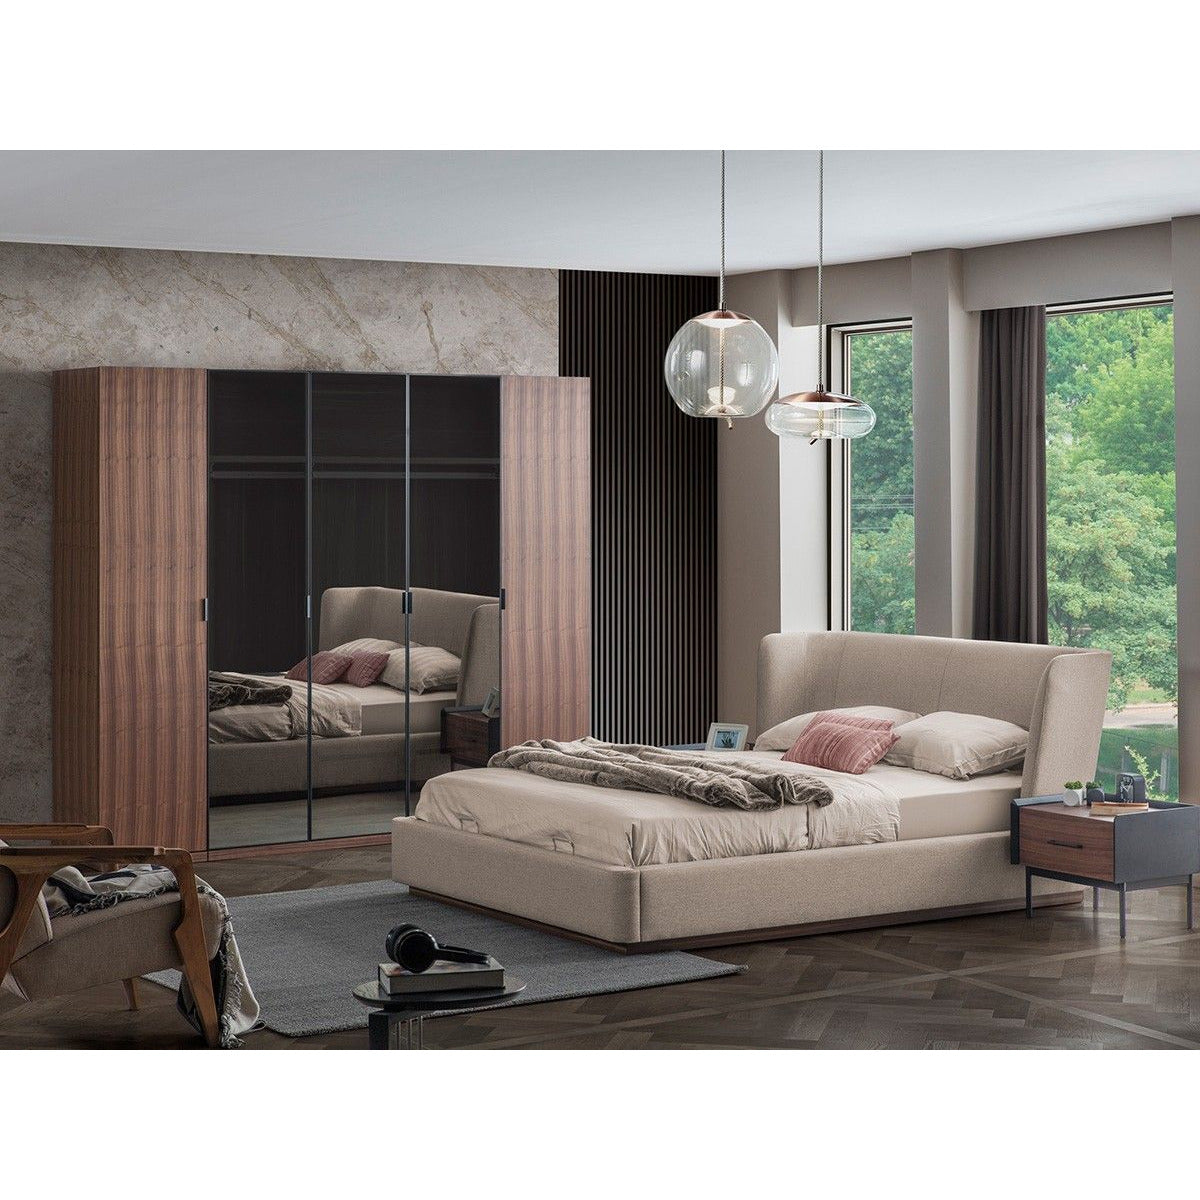 Rita Sovrumsset - LINE Furniture Group